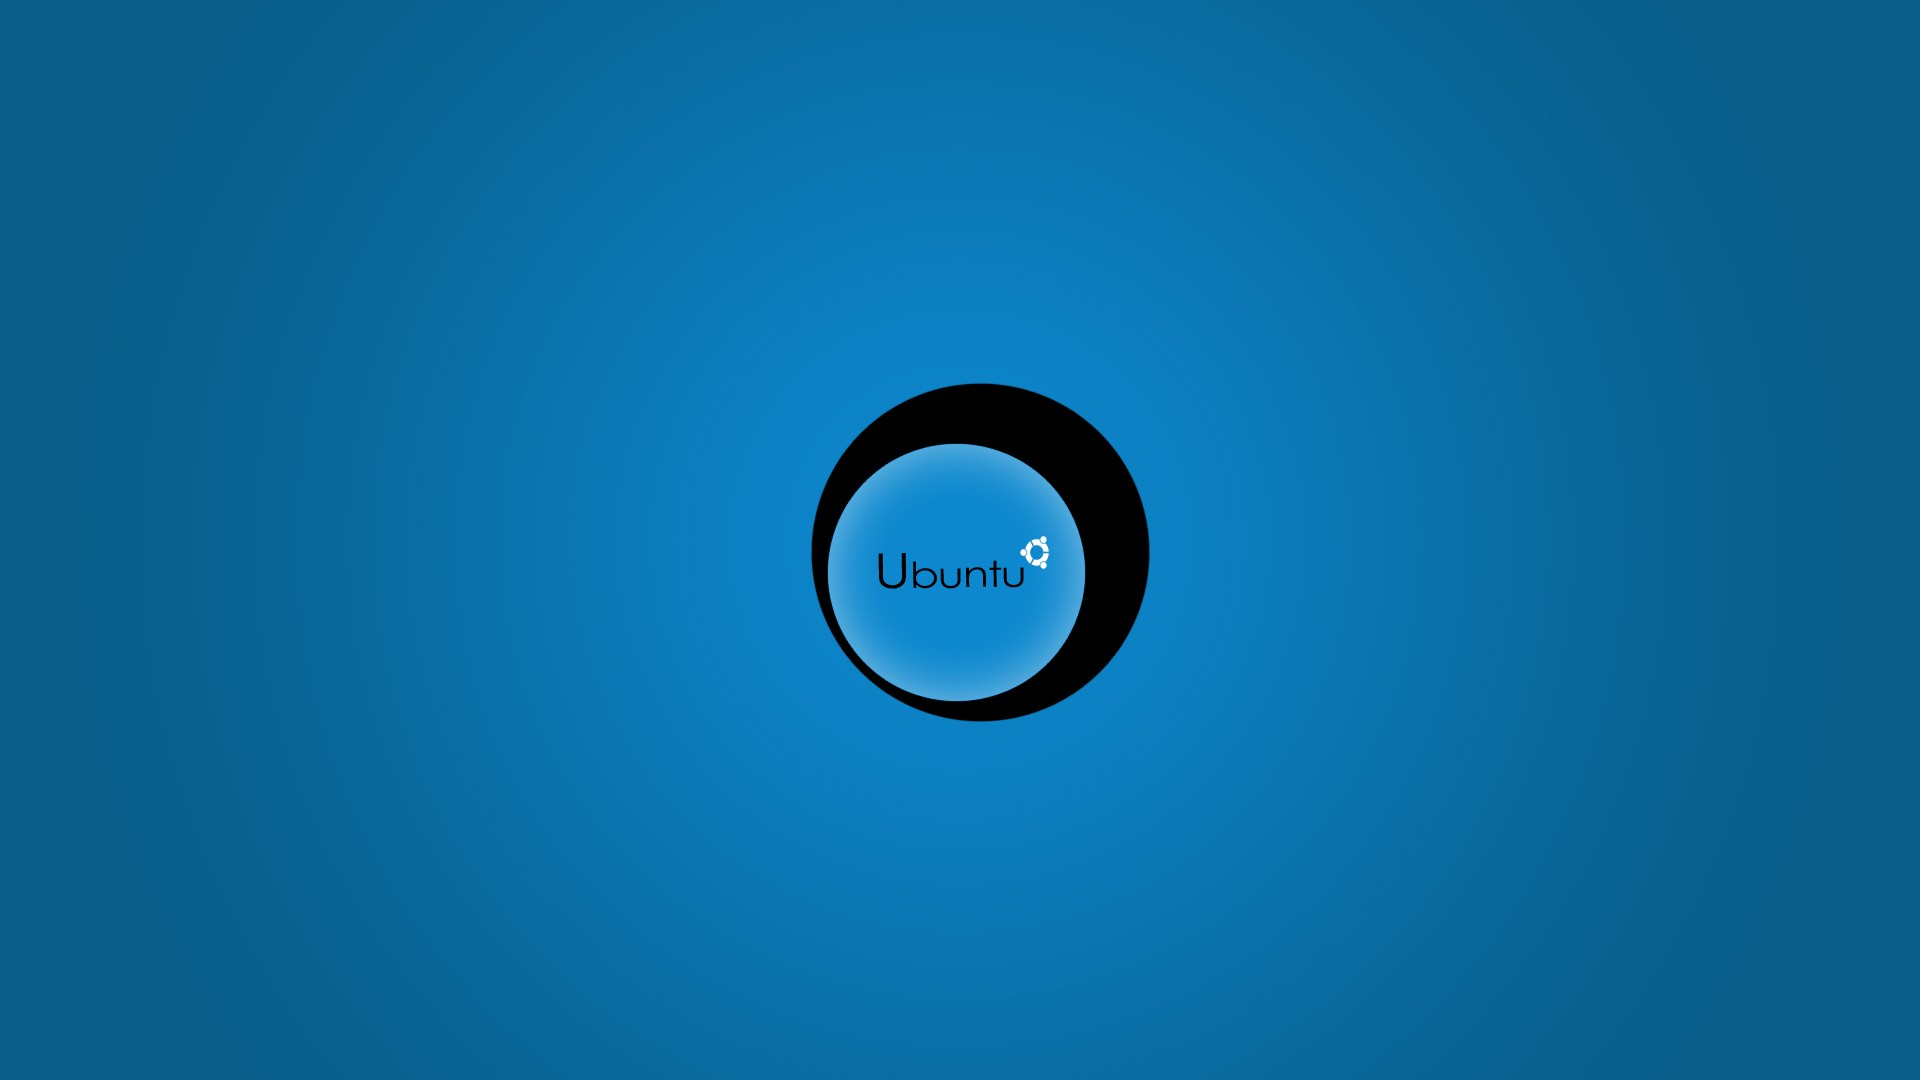 General 1920x1080 Linux Ubuntu blue background simple background operating system logo